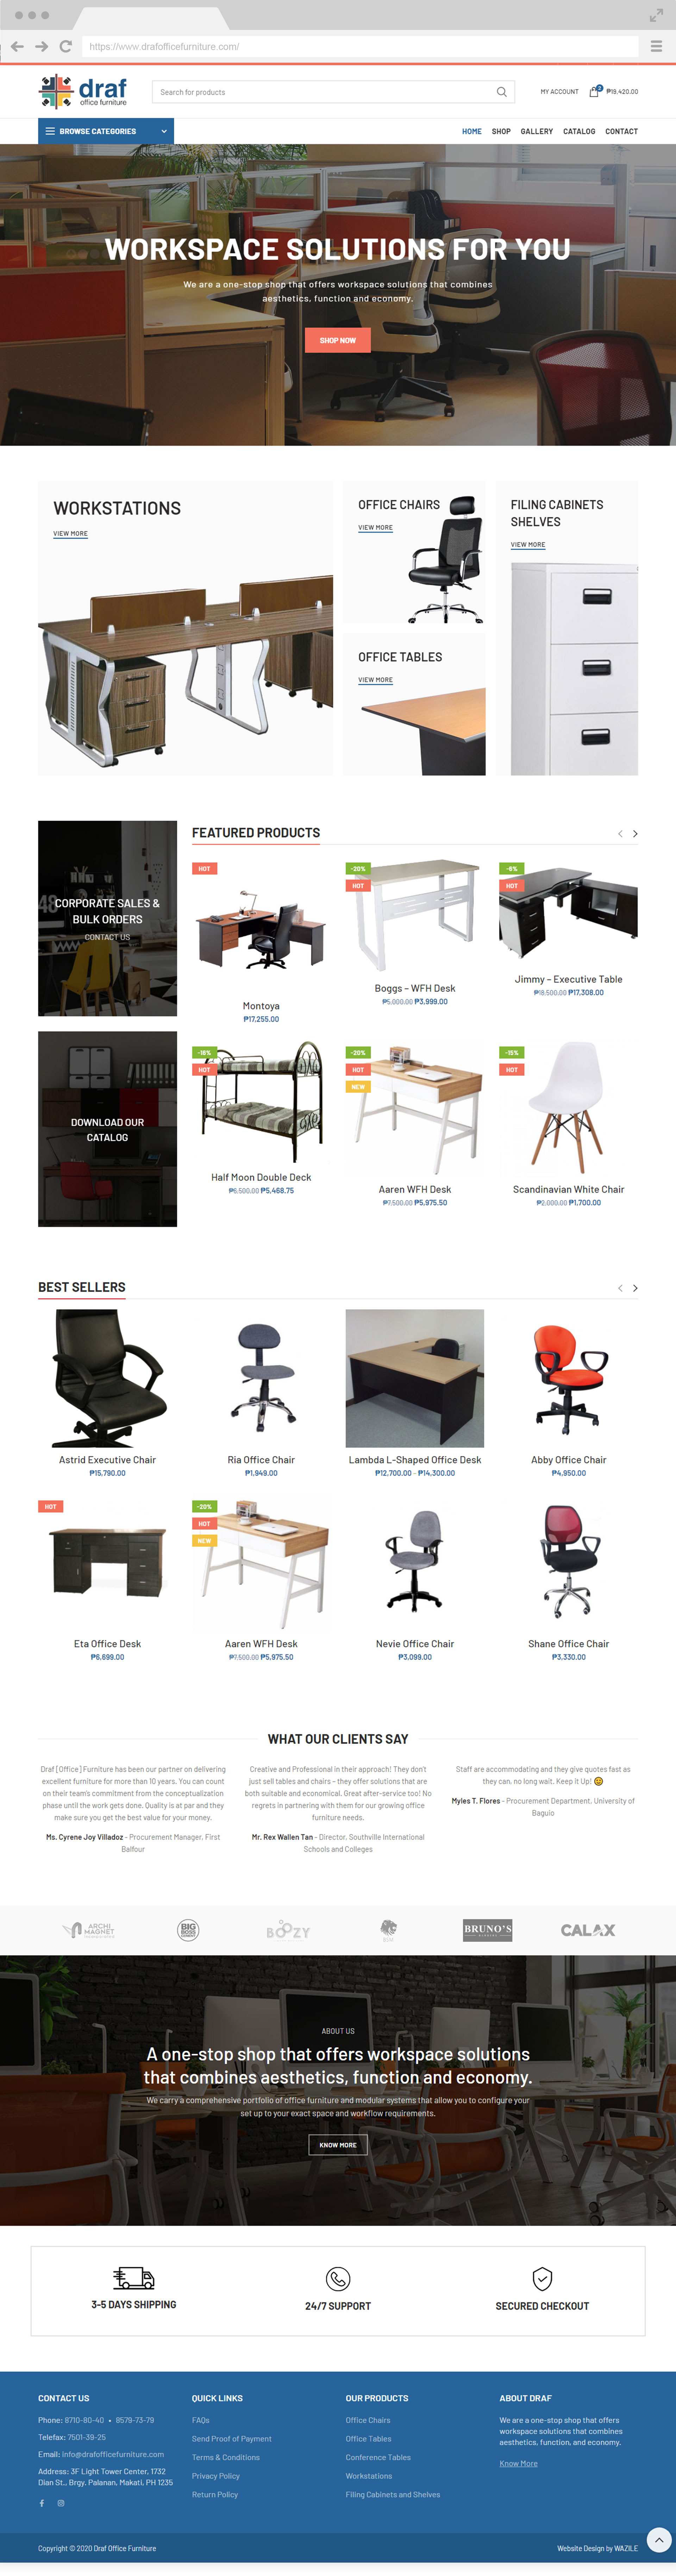 Draf Office Furniture Homepage